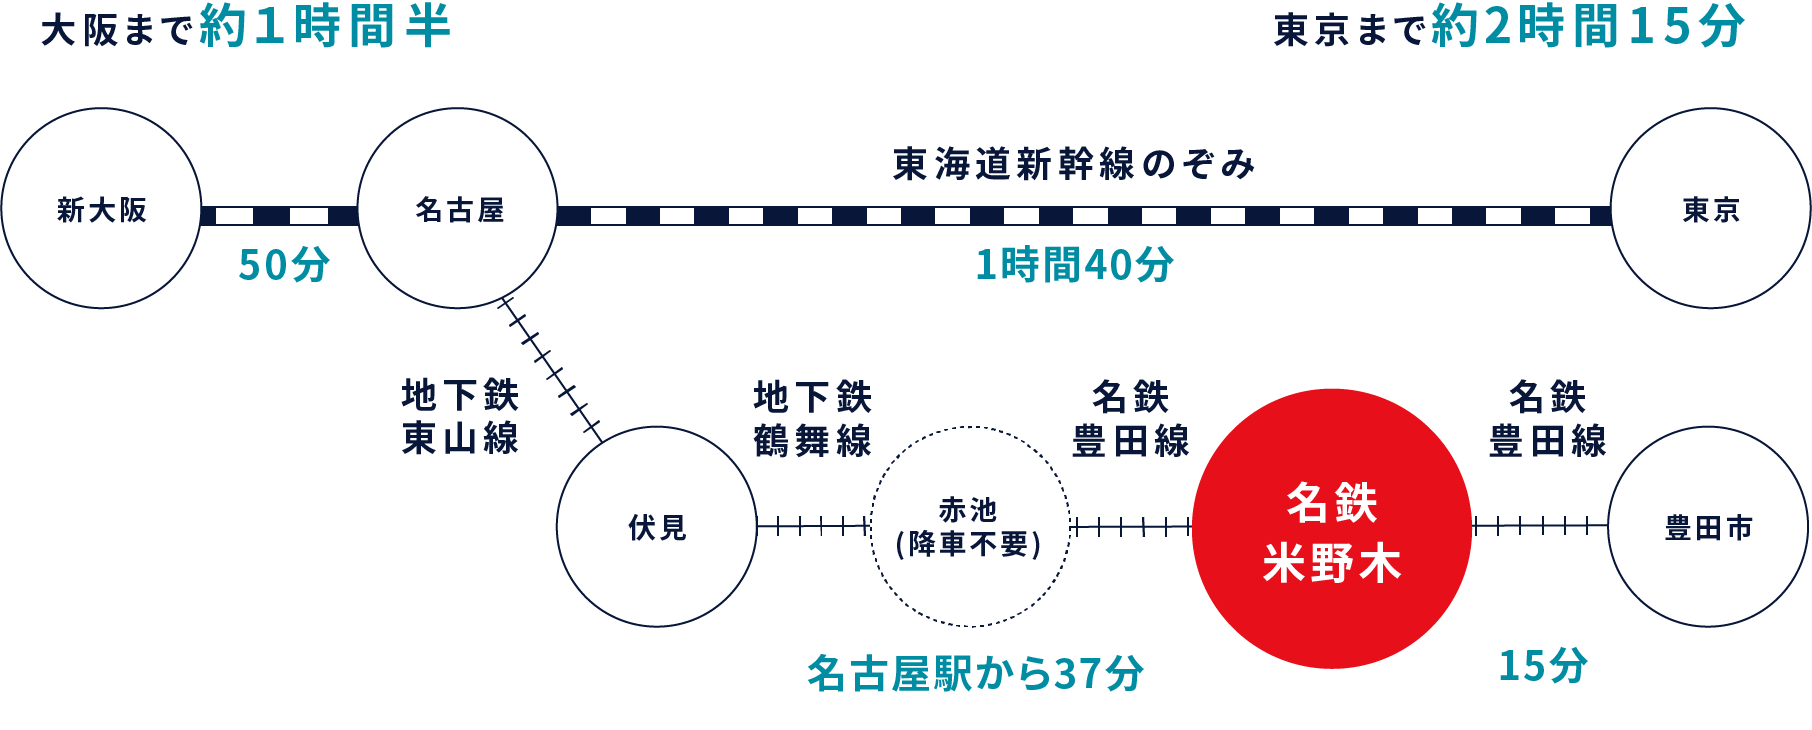 JR岡崎駅からの各方面へのMAP図